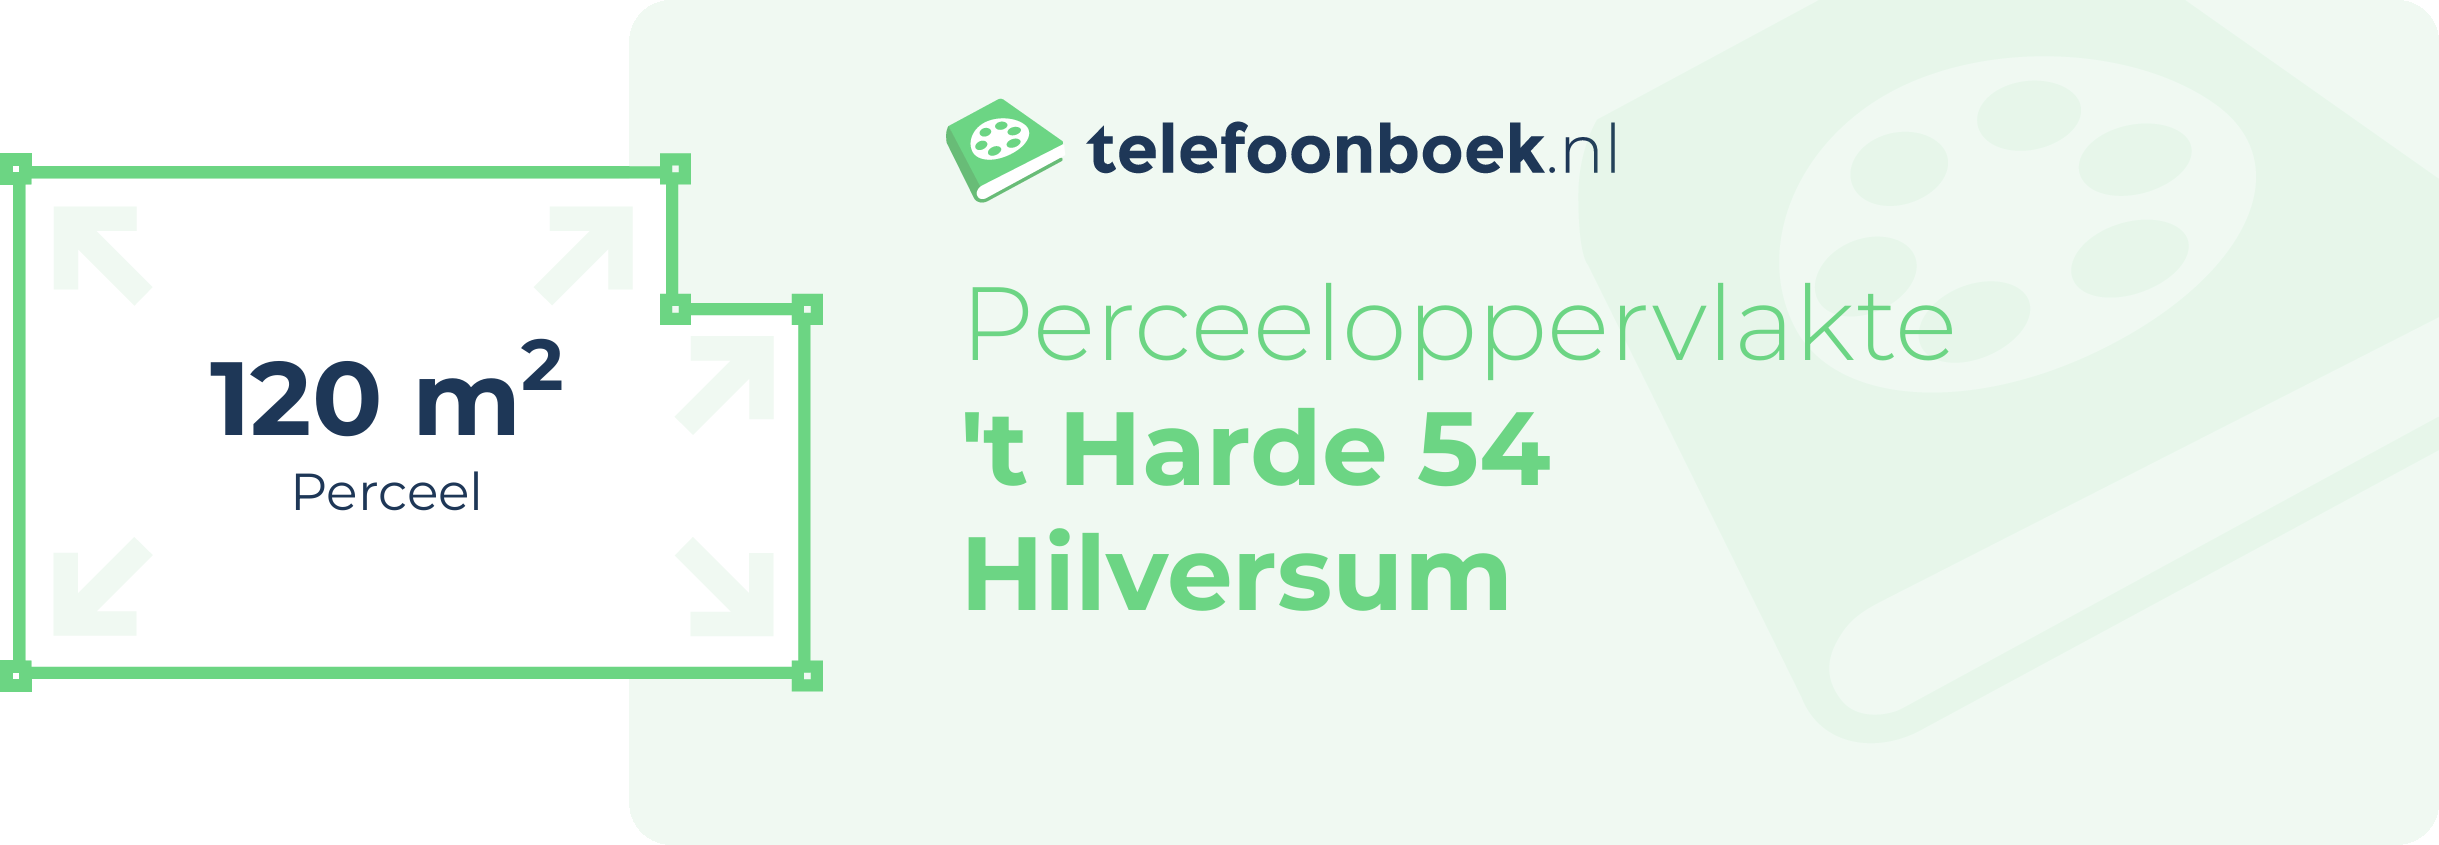 Perceeloppervlakte 't Harde 54 Hilversum